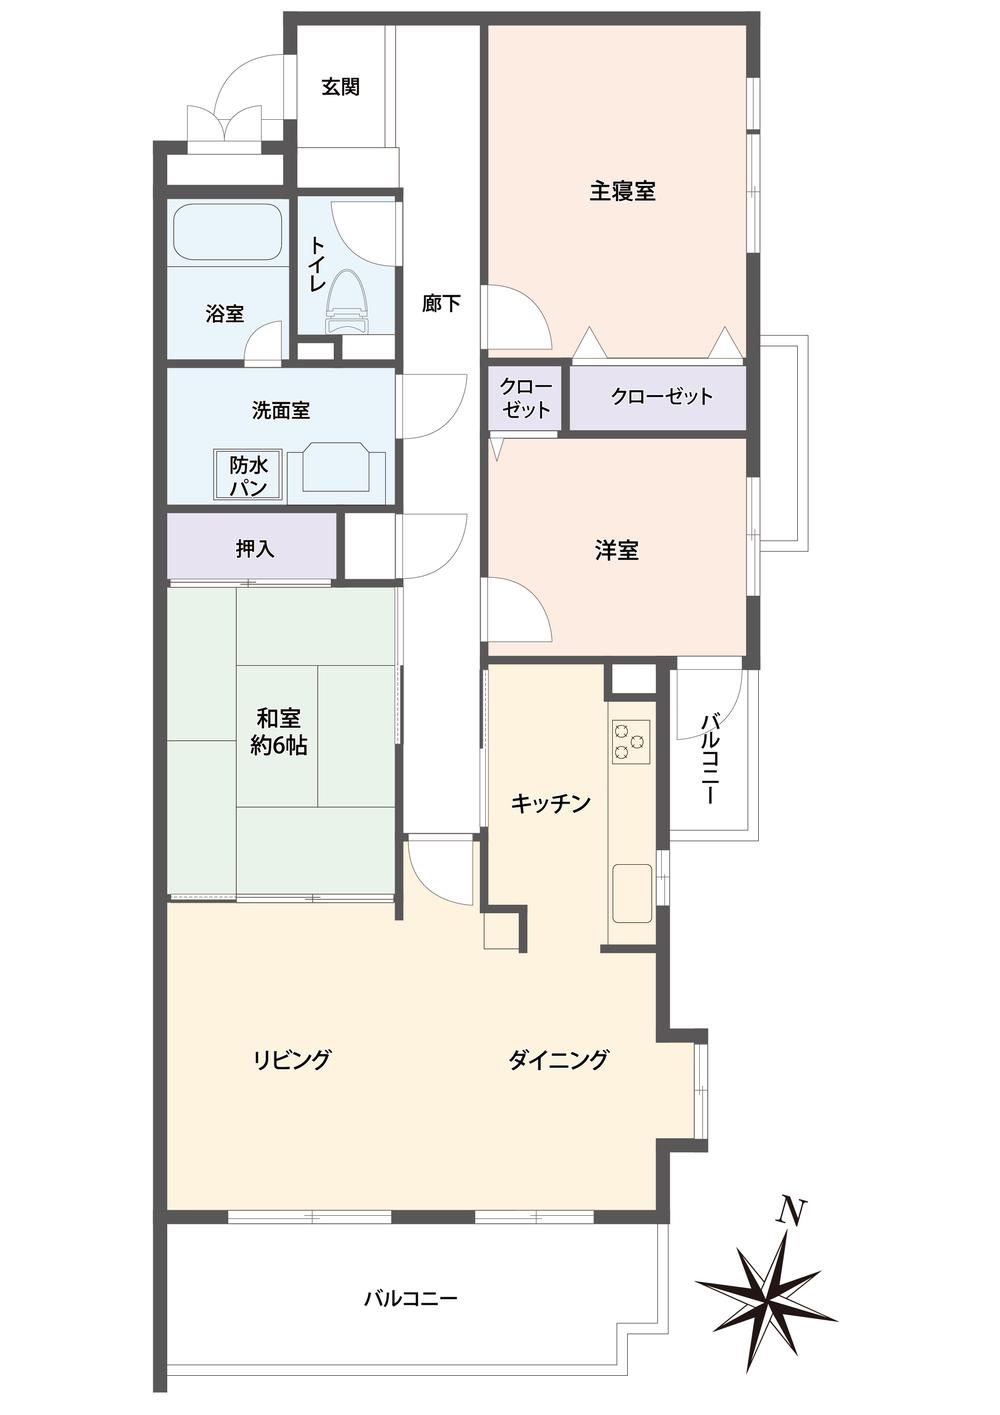 Floor plan. 3LDK, Price 25,800,000 yen, Footprint 88.5 sq m , Balcony area 12.5 sq m site (December 2013) Shooting